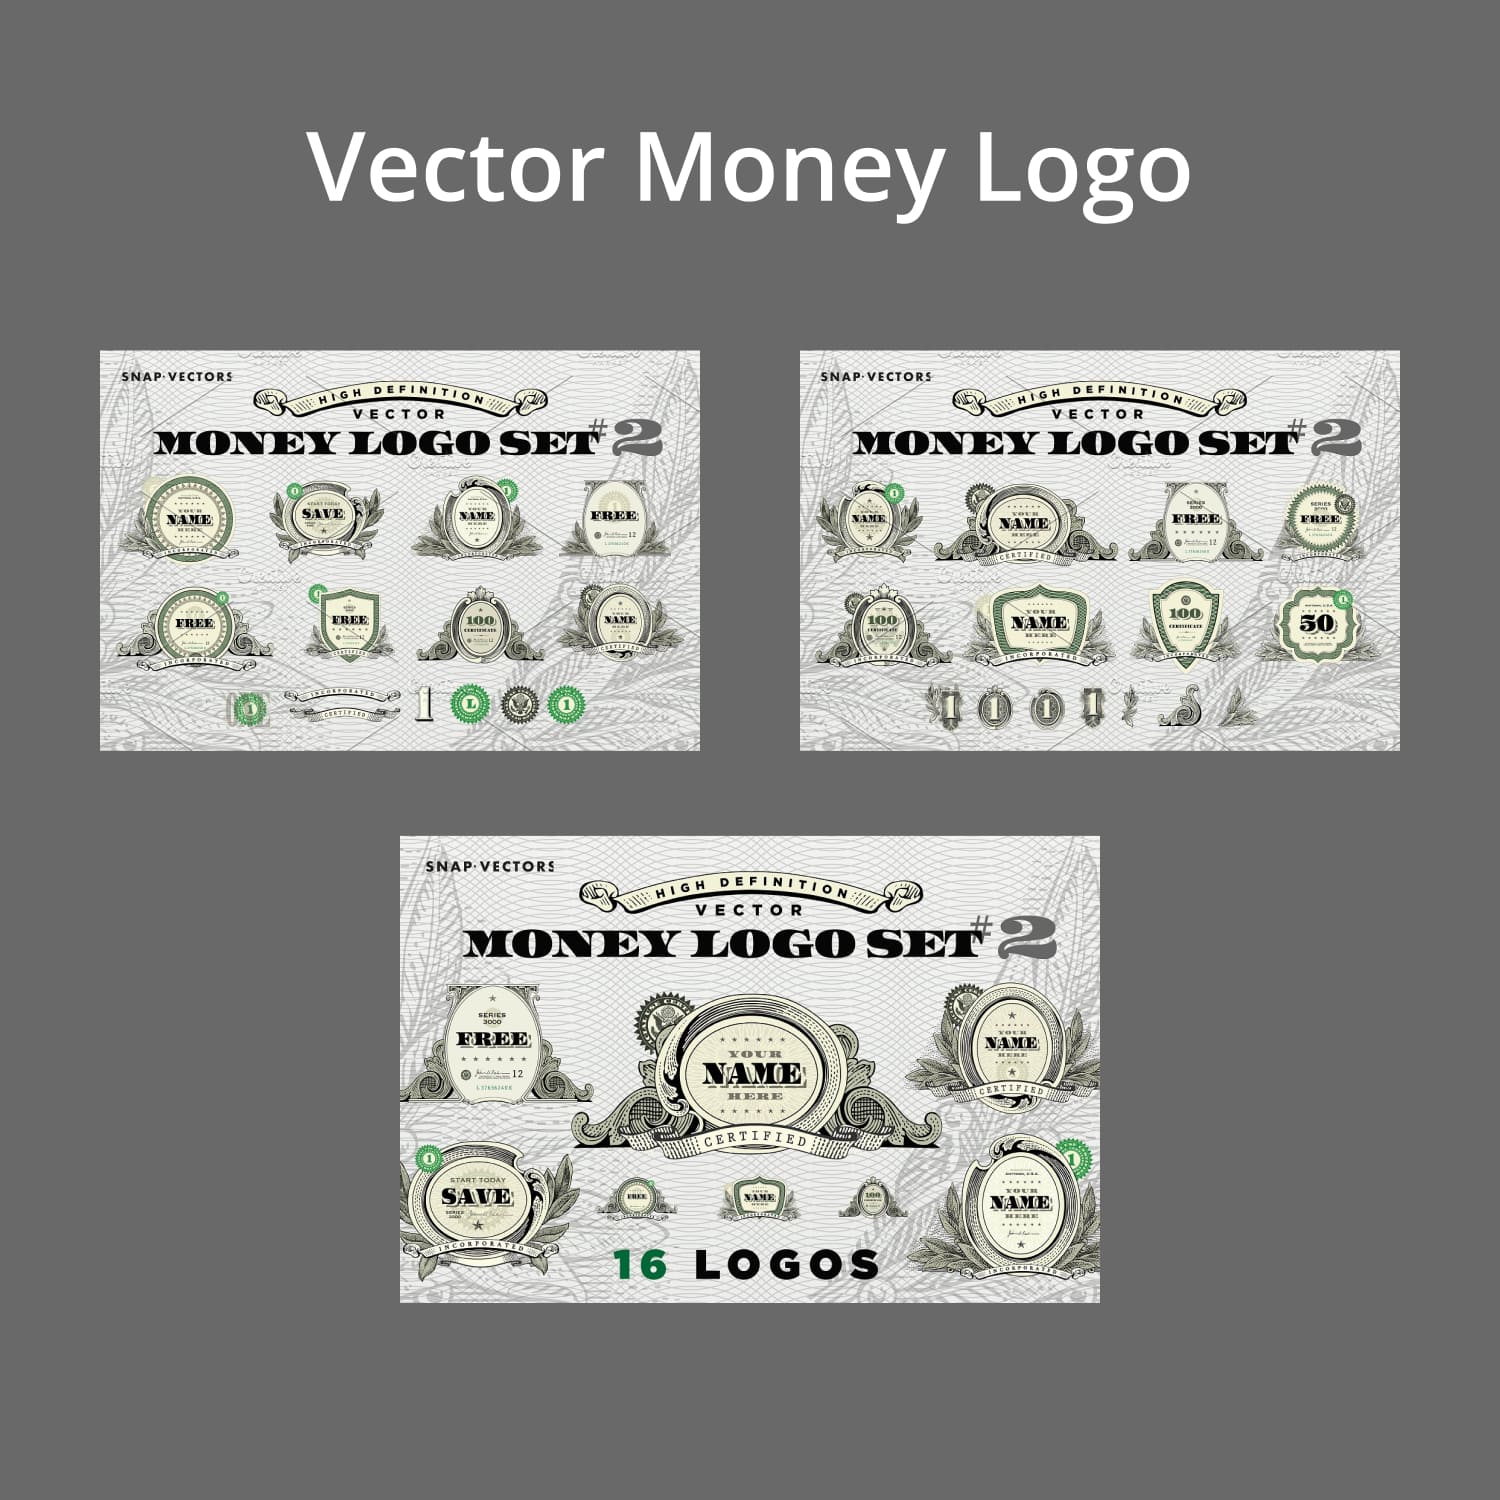 Vector Money Logo Set #2.